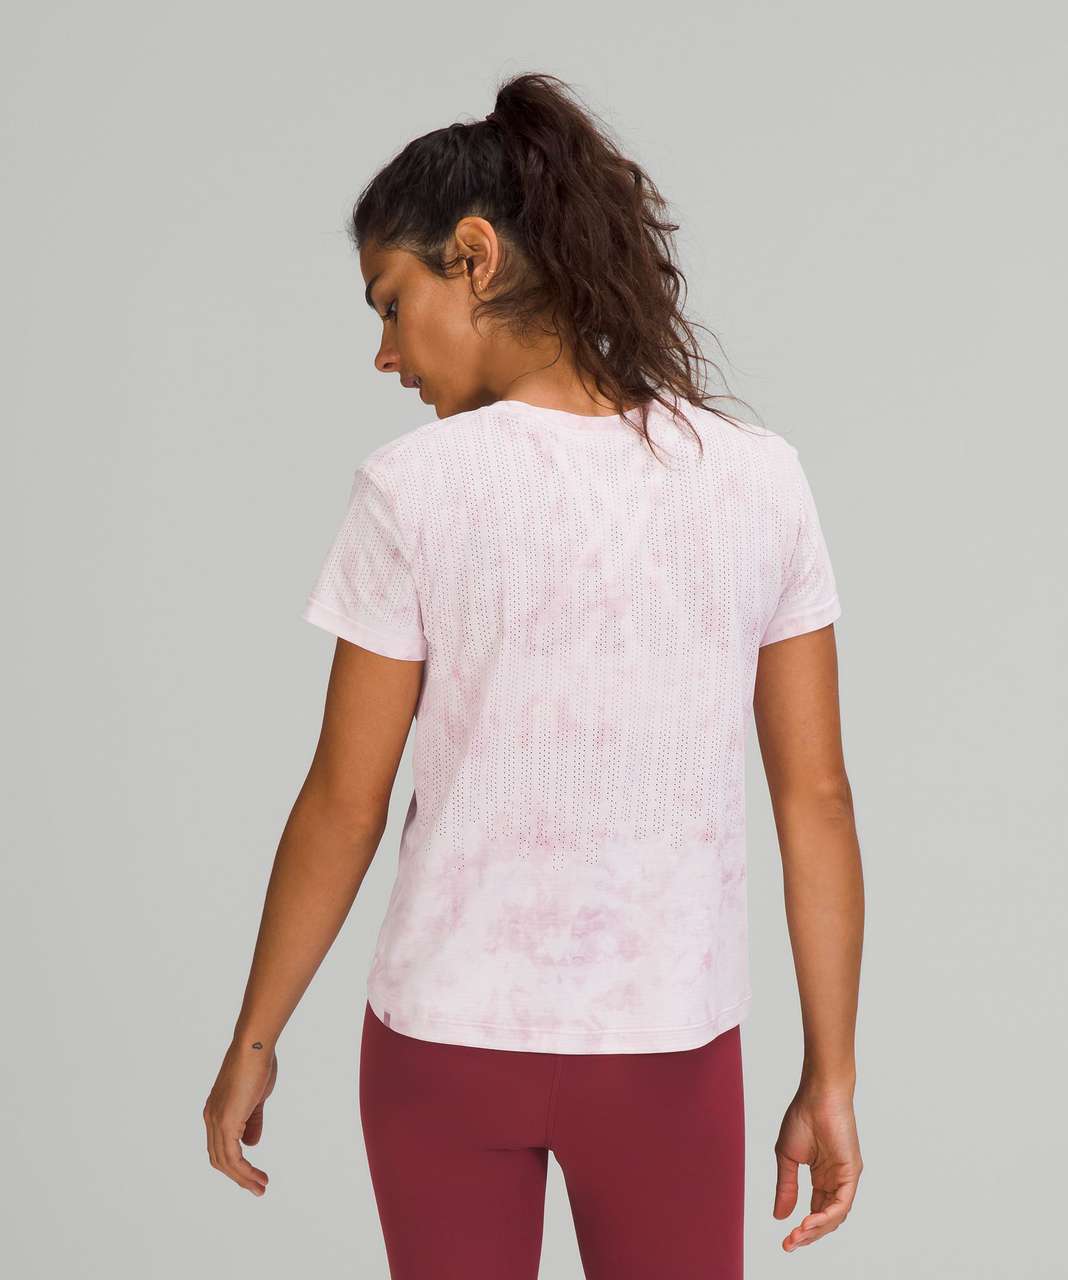 Lululemon Train to Be Short Sleeve Shirt - Rainstripe Sheer Cloud Wash Pink Taupe